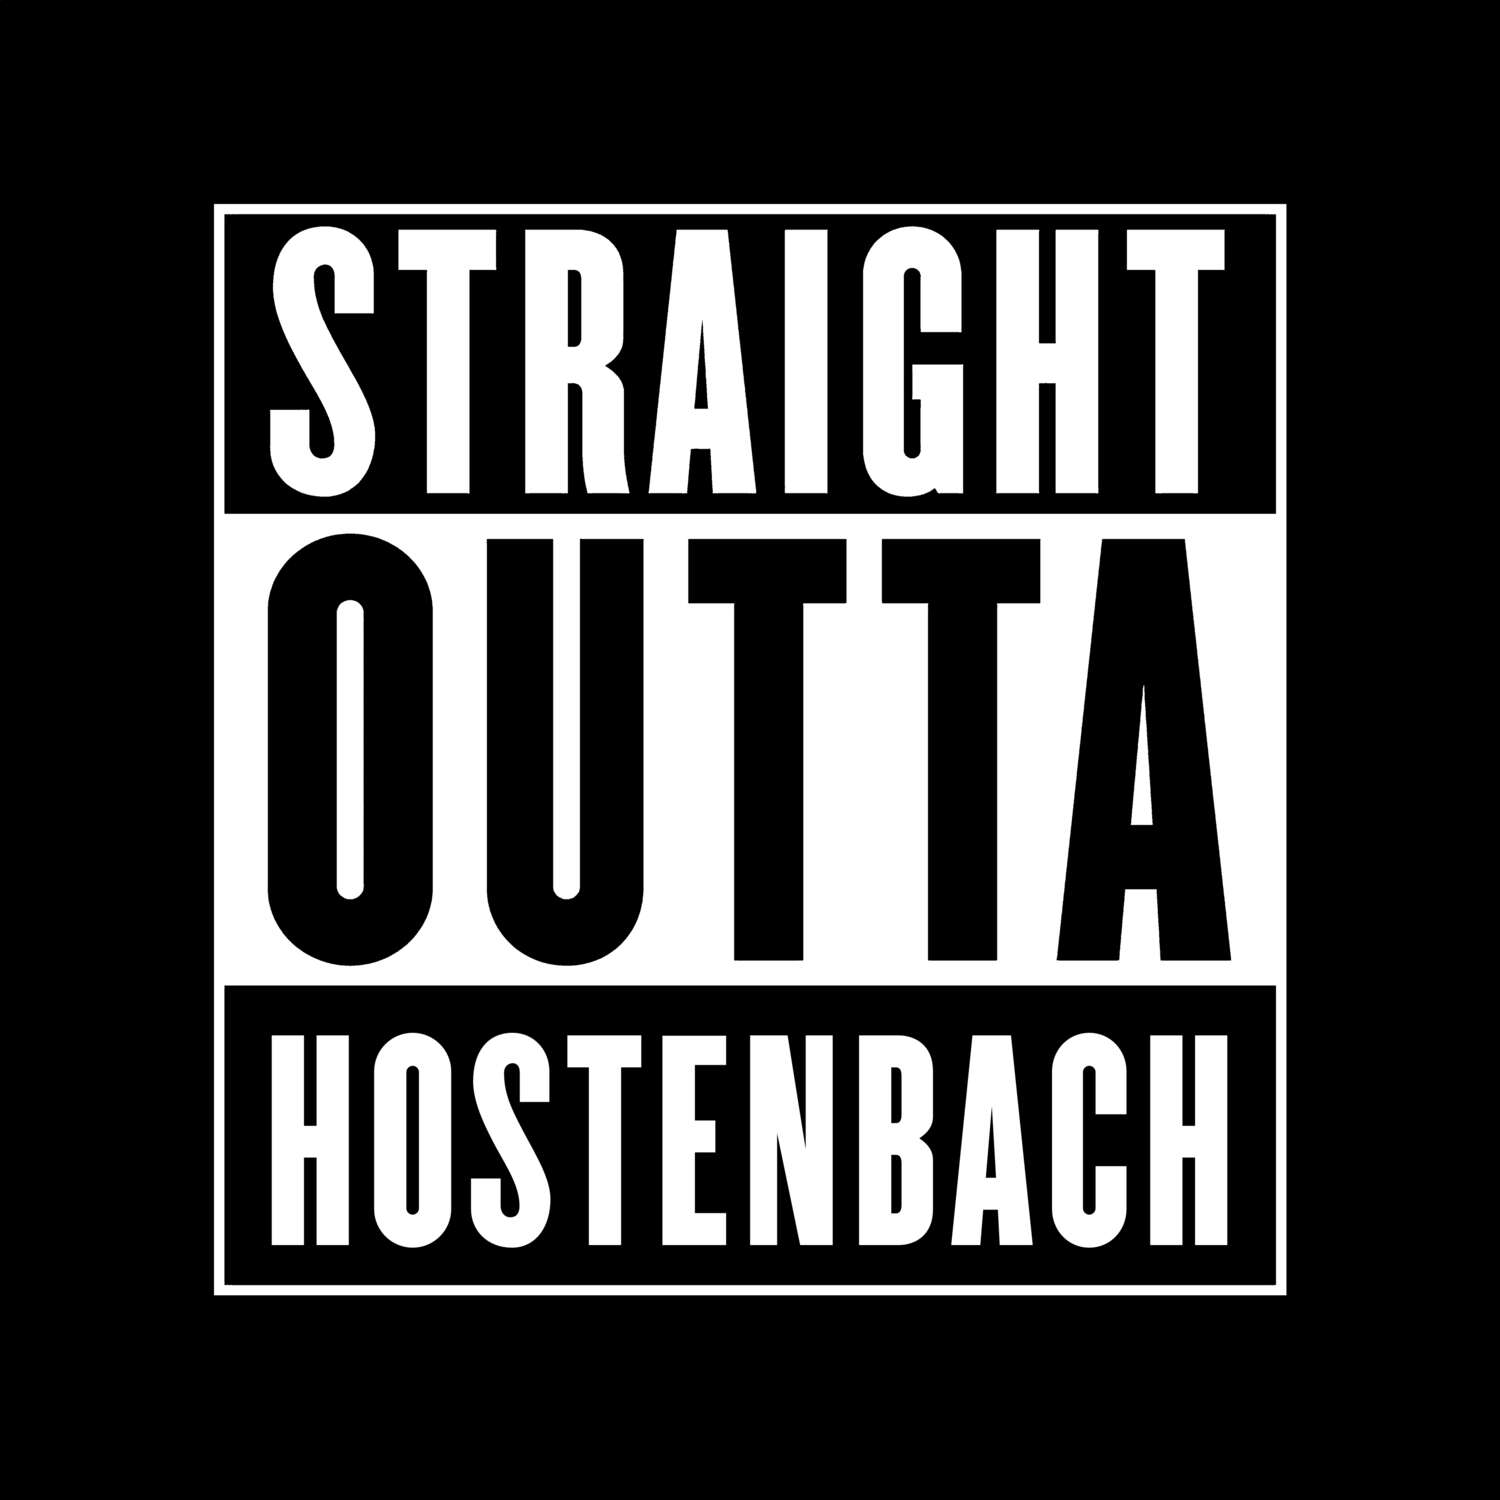 Hostenbach T-Shirt »Straight Outta«